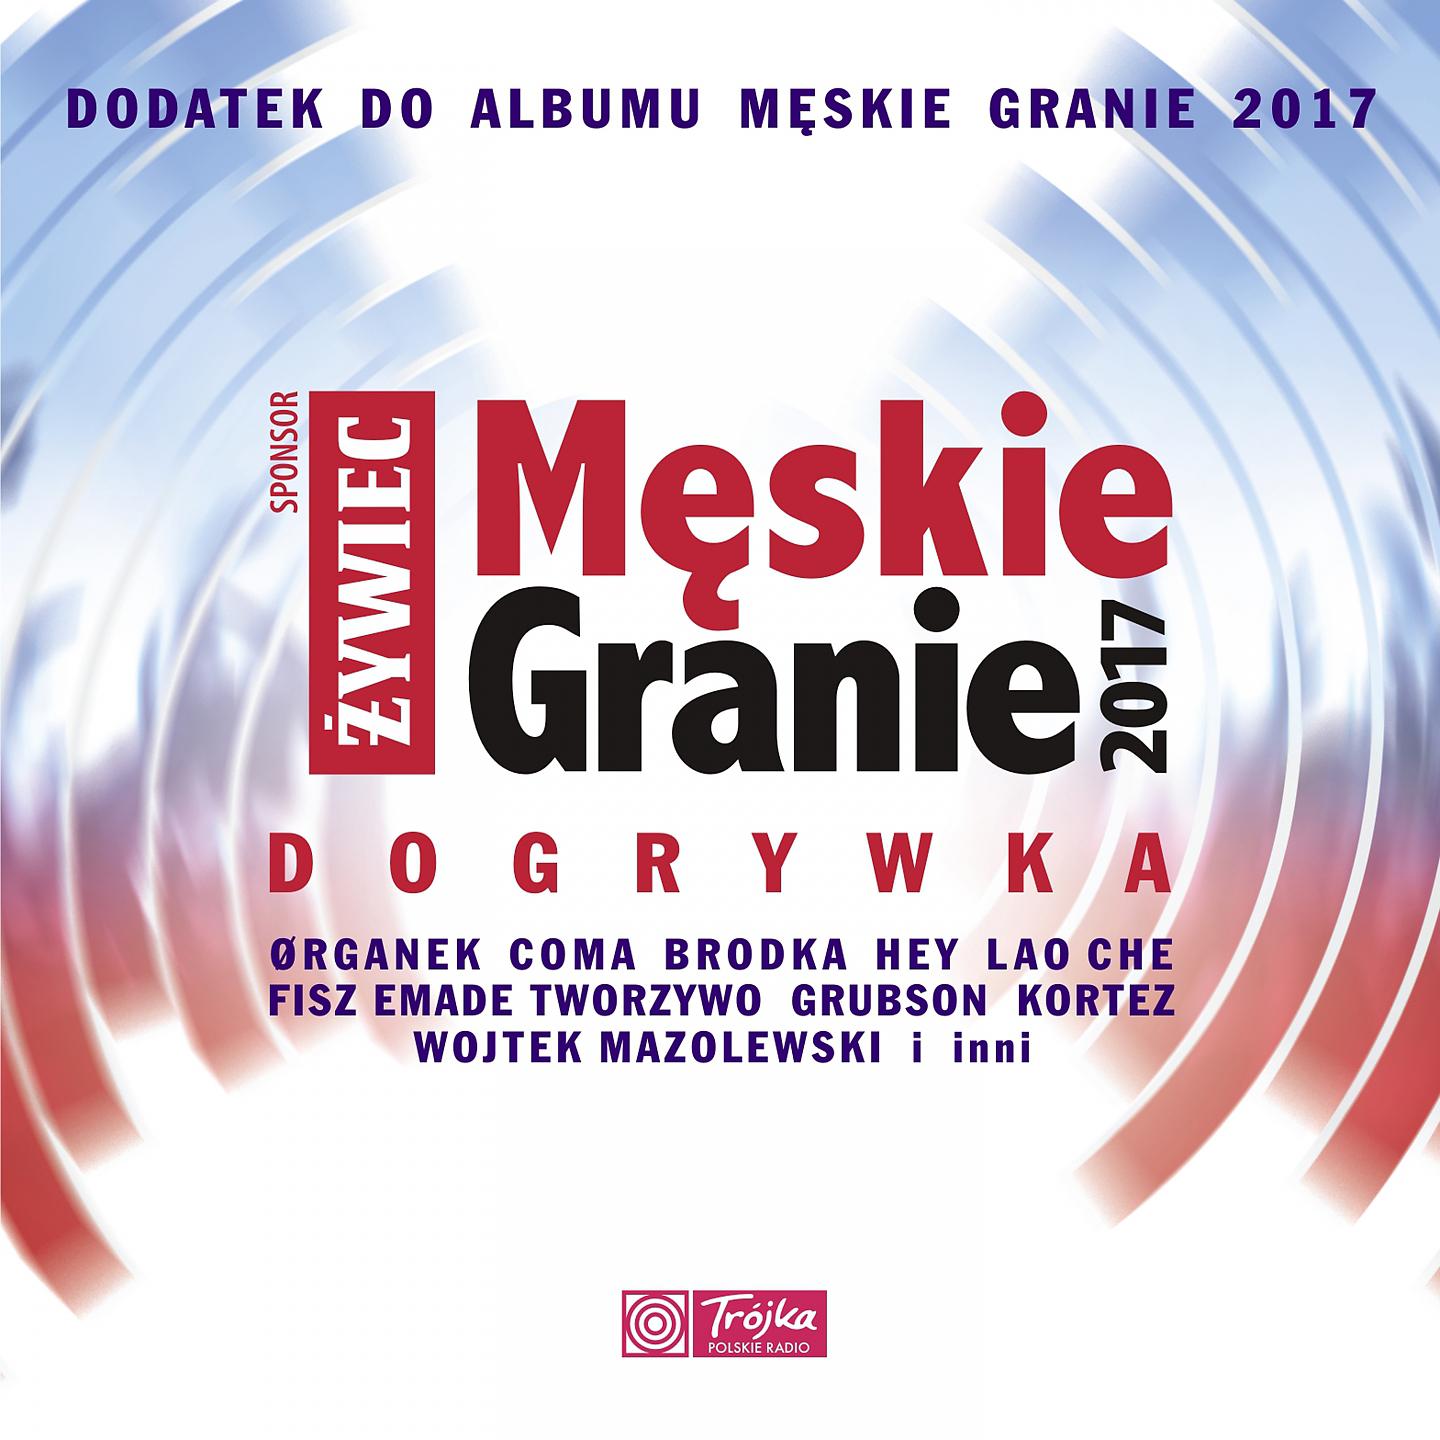 Постер альбома Męskie granie 2017 dogrywka